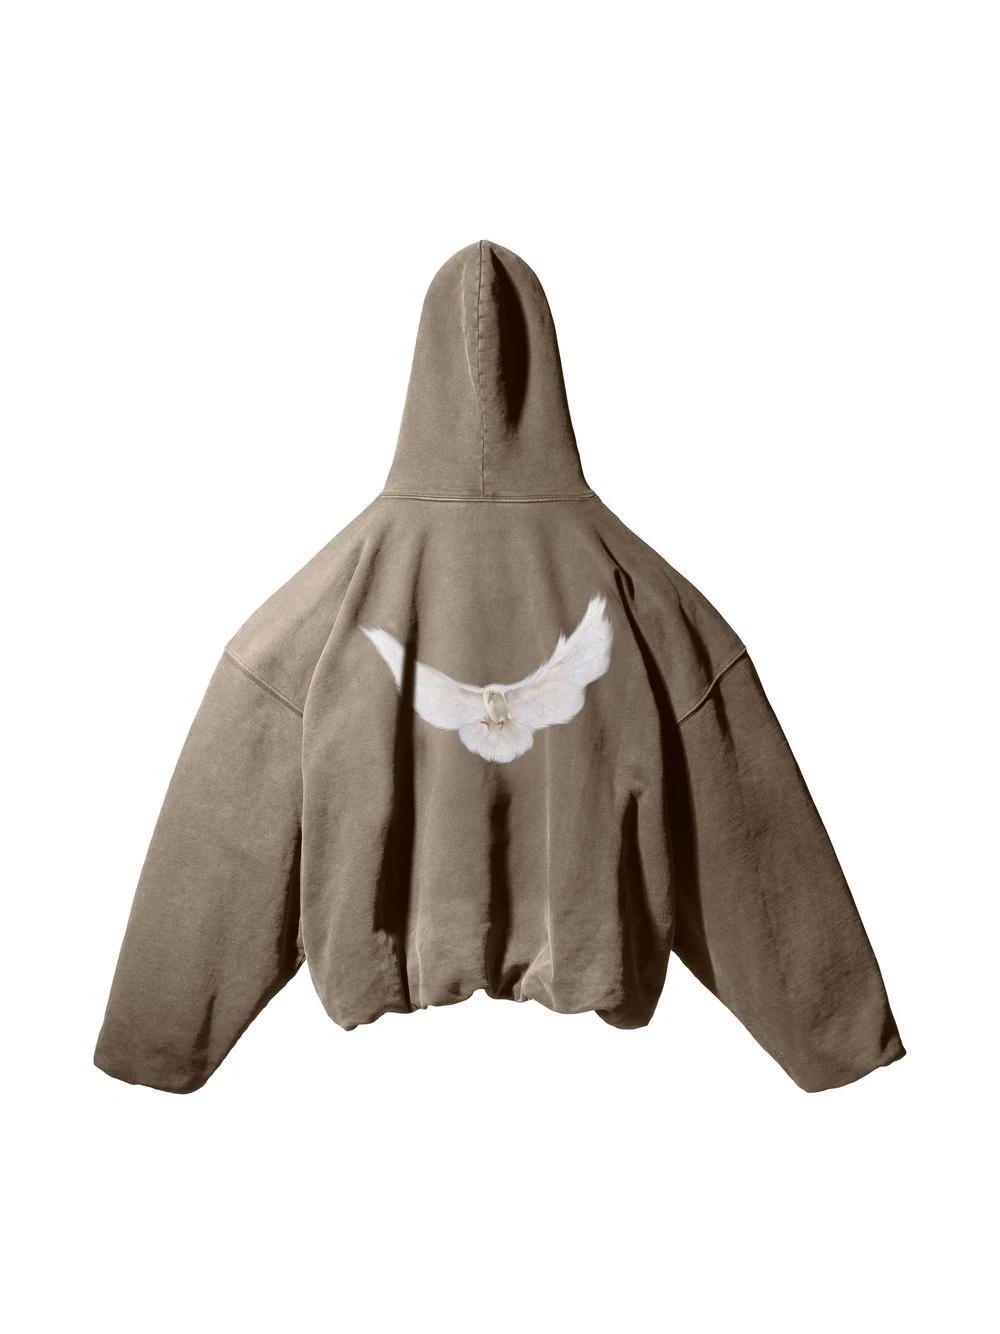 PAUSE or Skip: Yeezy Gap Engineered by Balenciaga 'Dove' Hoodie